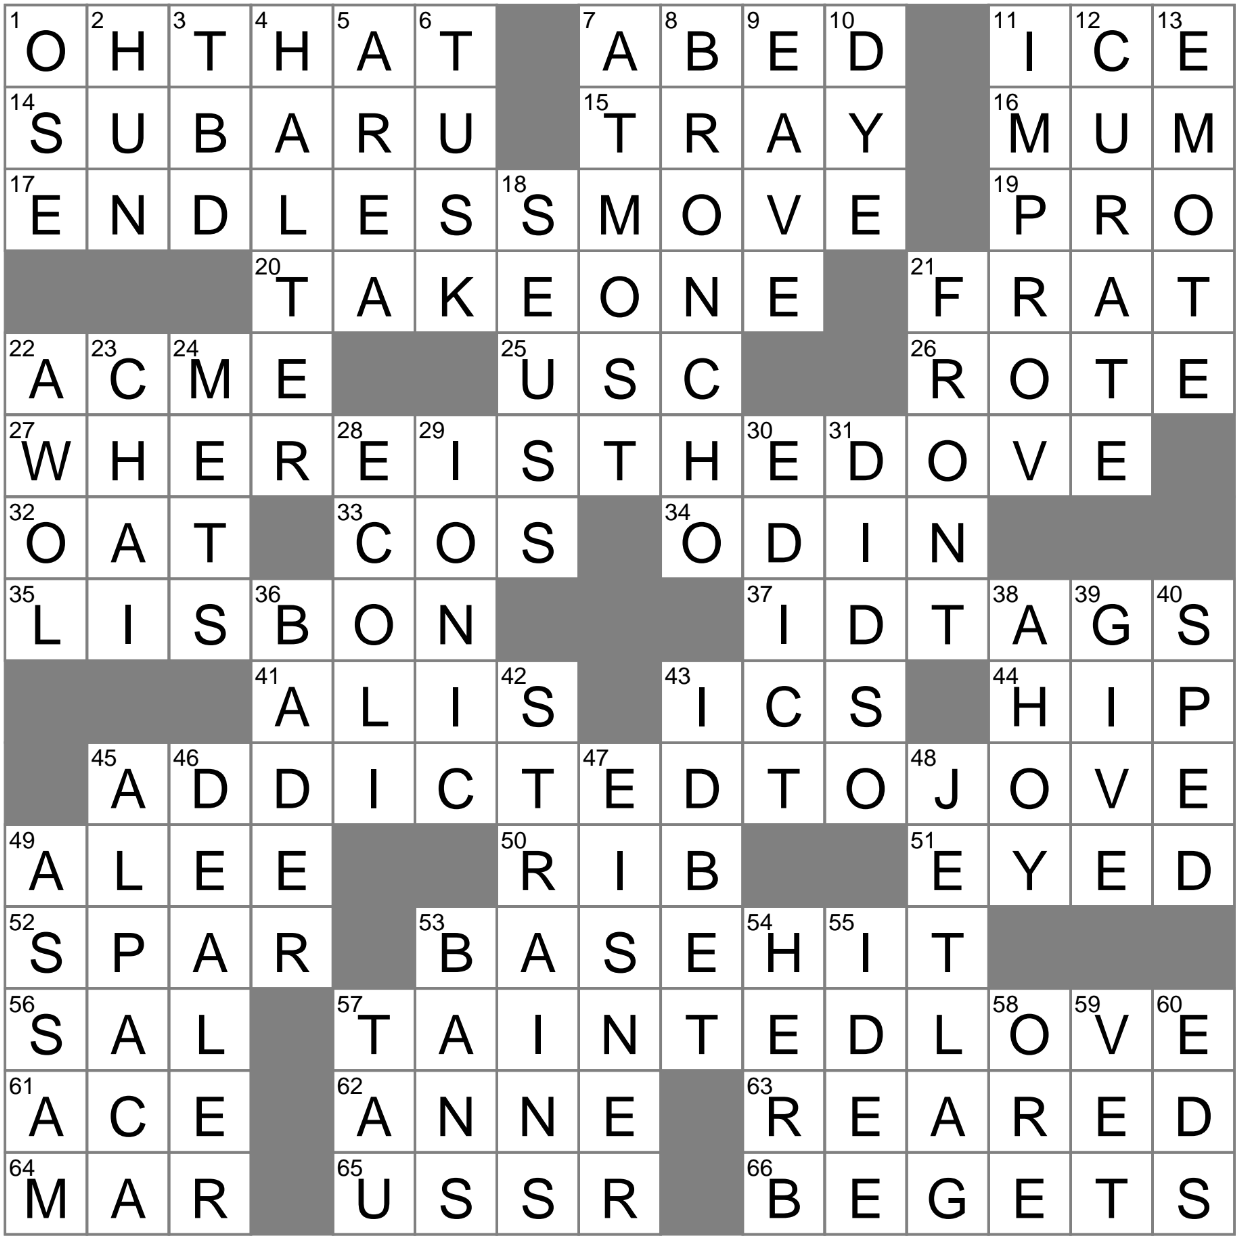 LA Times Crossword 5 May 23 Friday LAXCrossword com